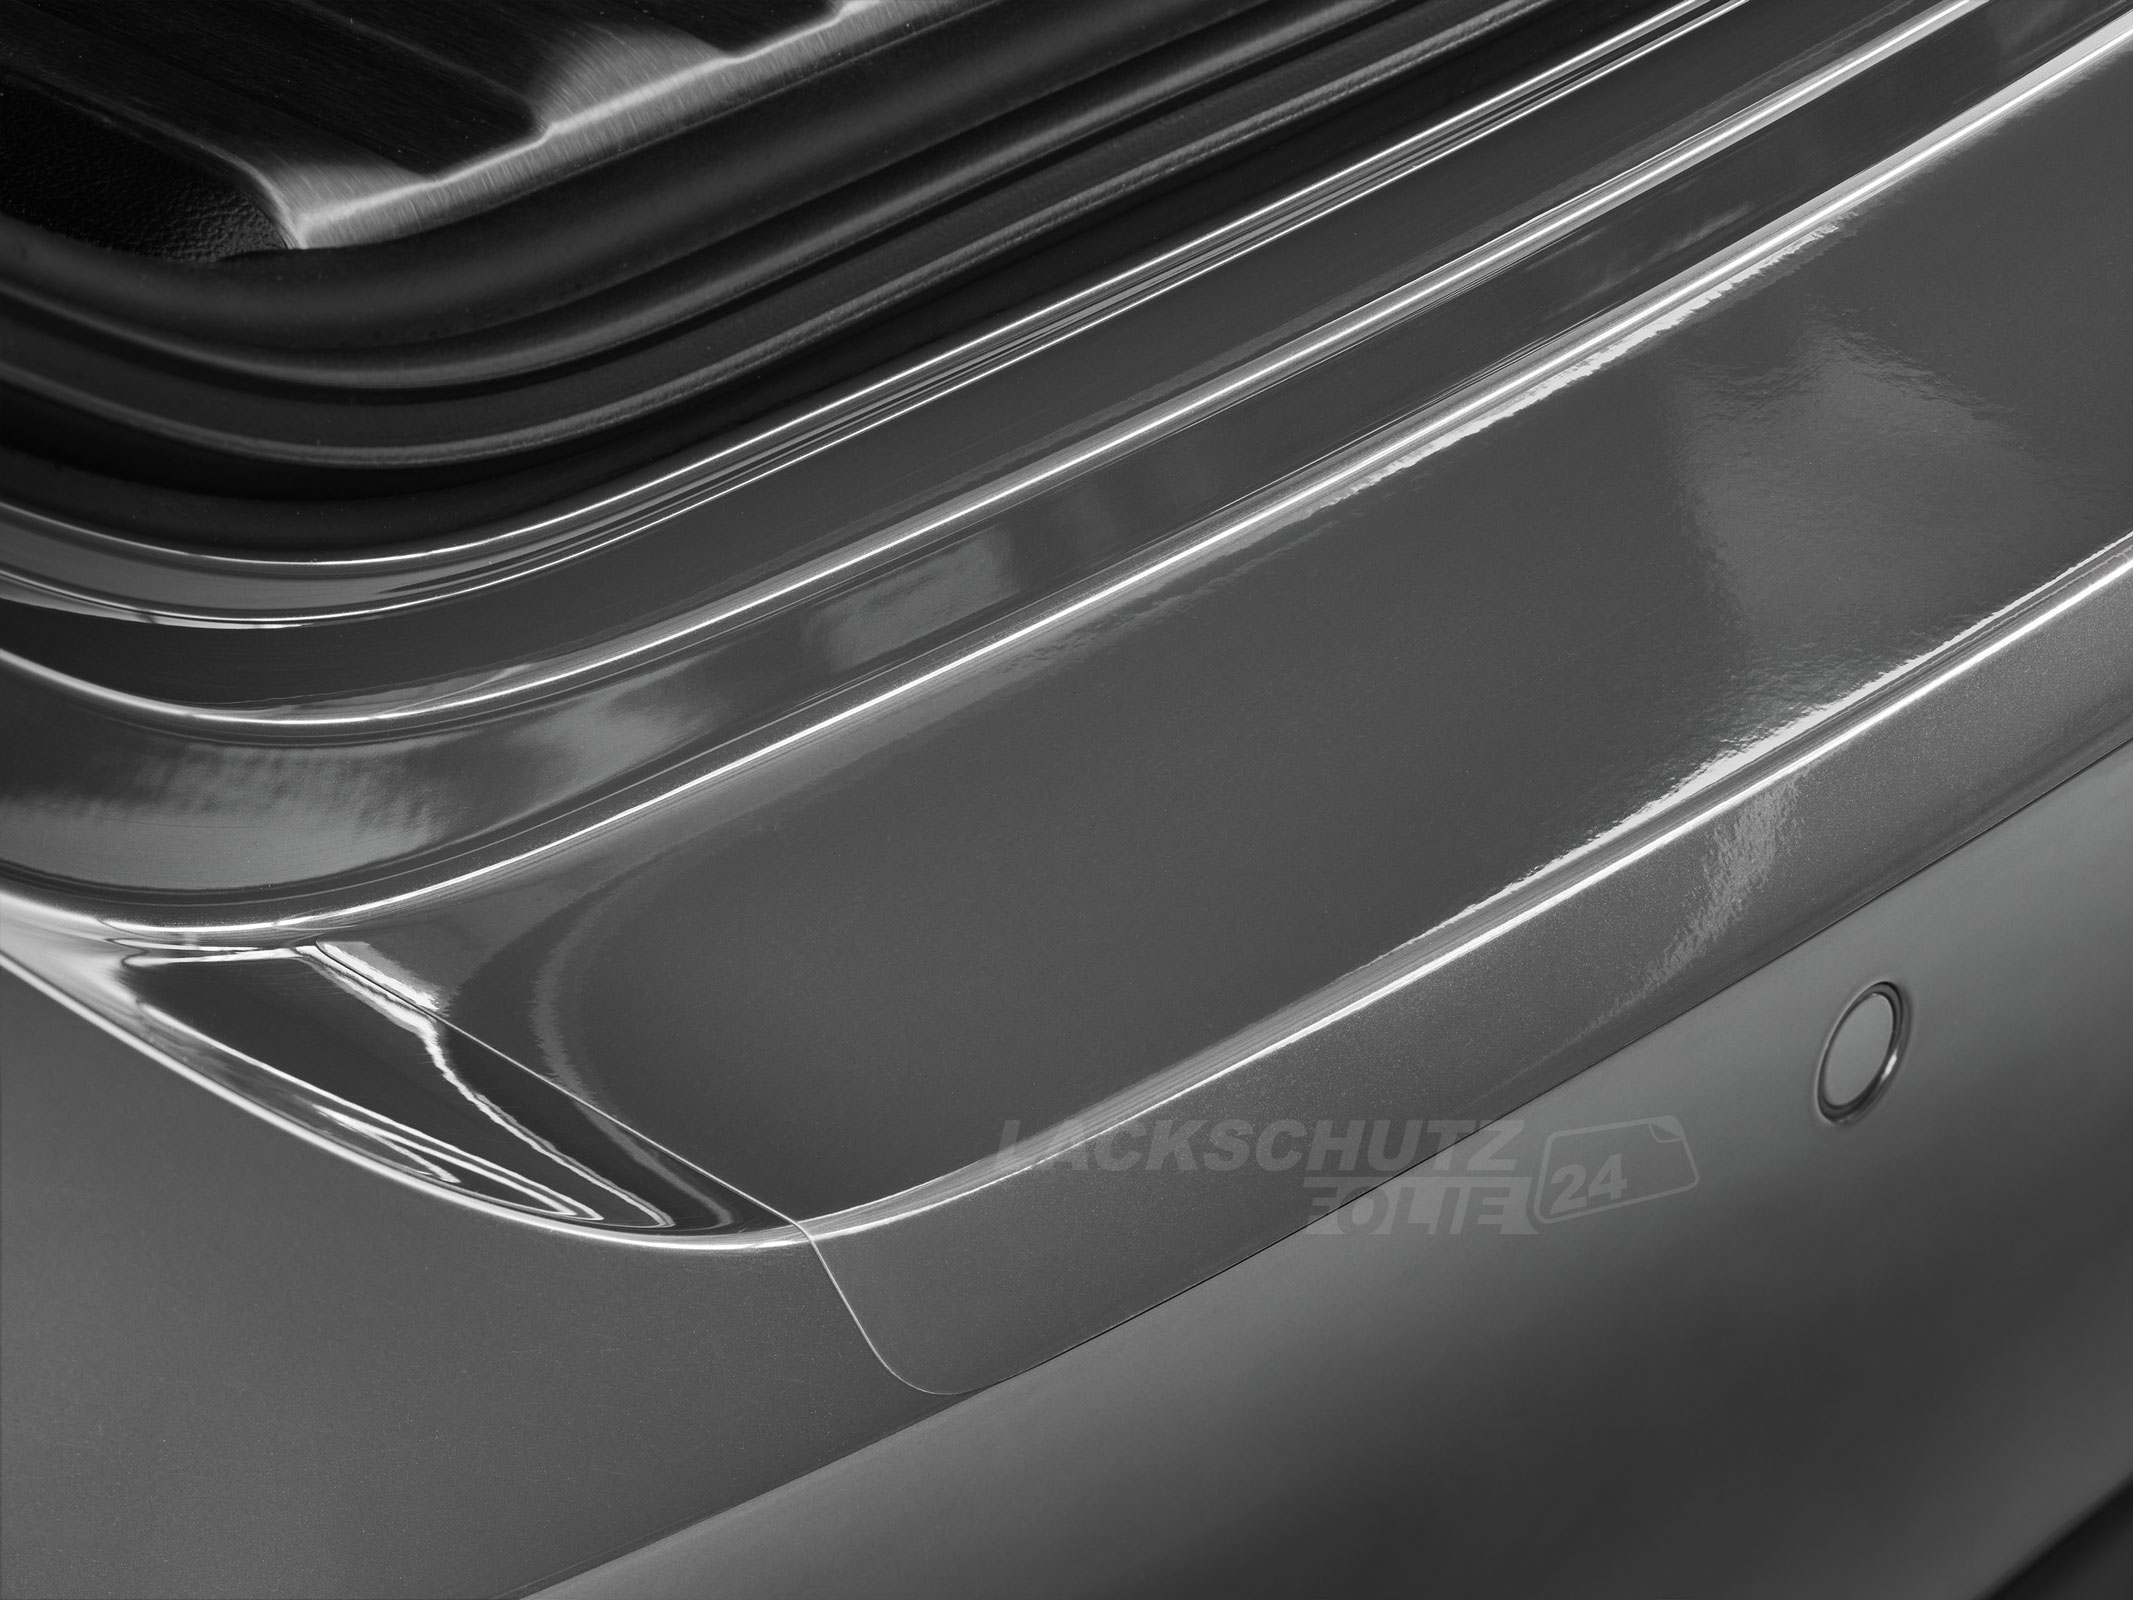 Ladekantenschutzfolie - Transparent Glatt Hochglänzend 150 µm stark für BMW 3er Coupe Typ E92, BJ 2007-07/2013